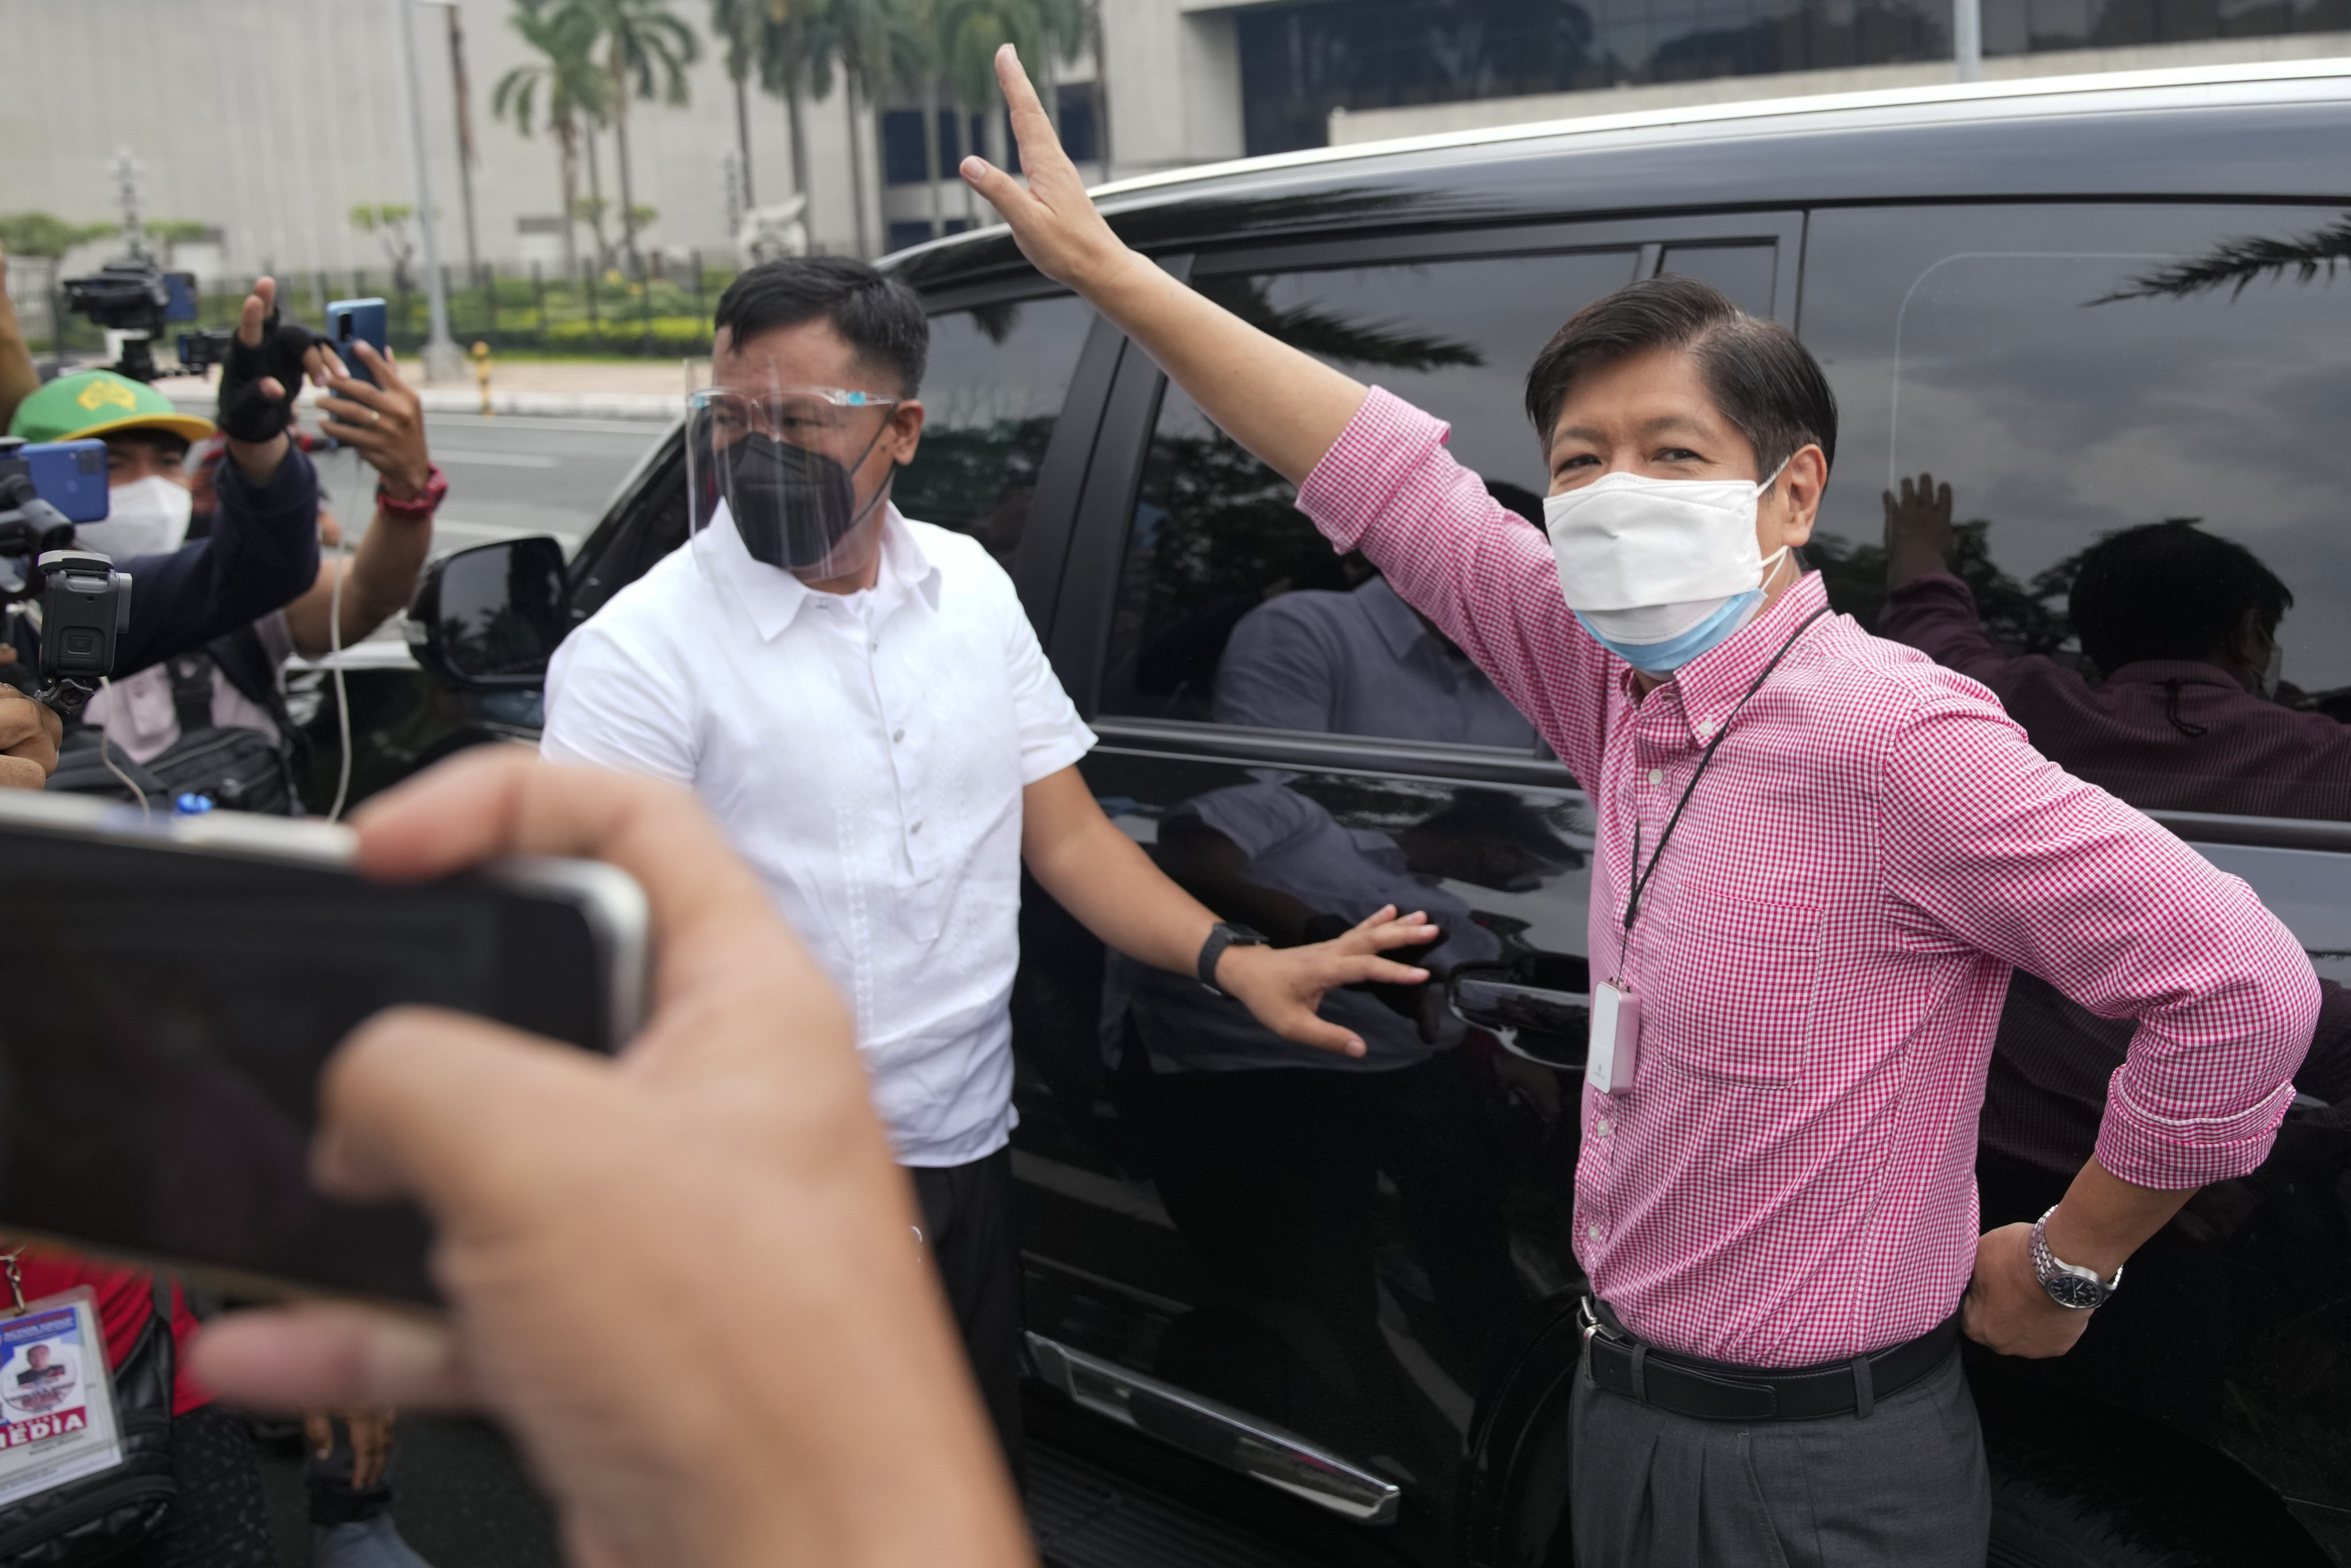 Bongbong Marcos Jnr has had an assassination threat made against him. Photo: AP